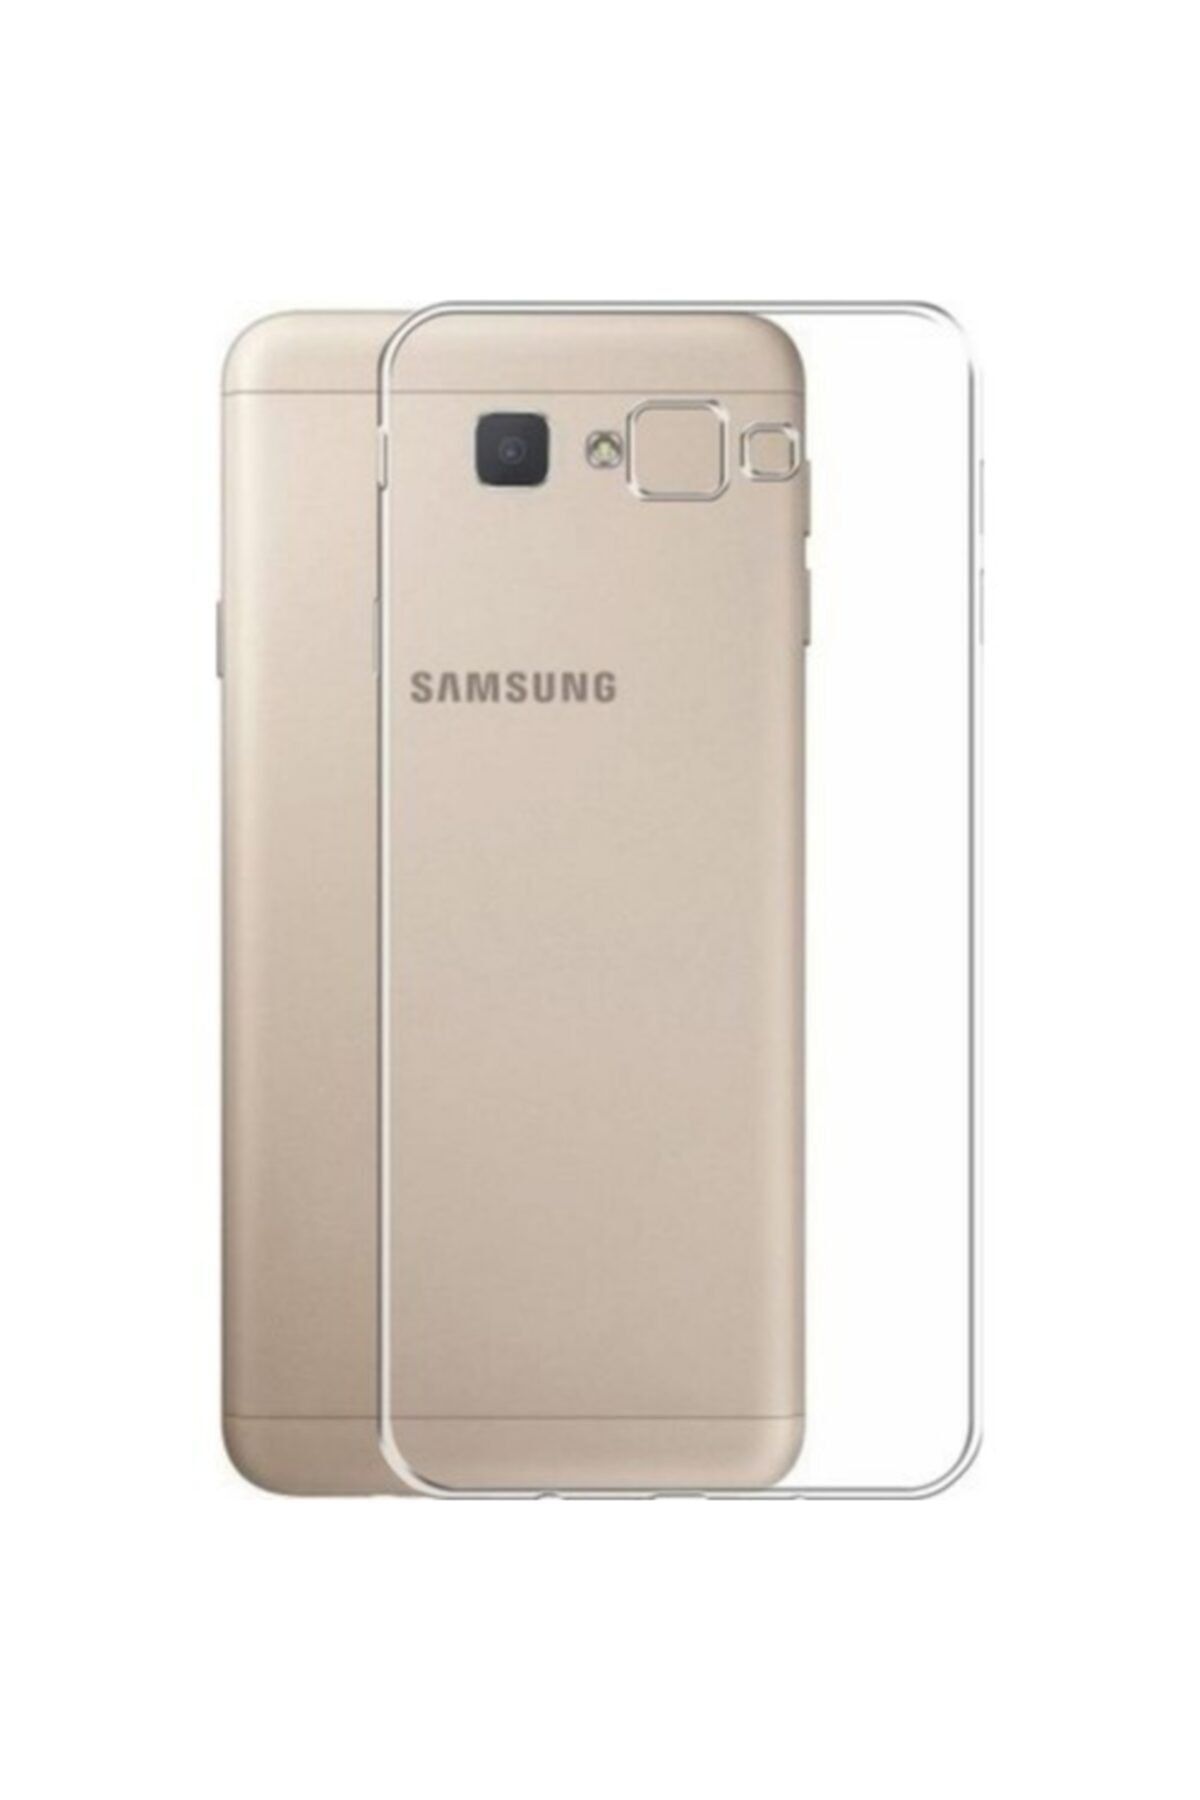 Fibaks Samsung Galaxy J7 Prime Kılıf A Şeffaf Lüx Süper Yumuşak 0.3mm Ince Slim Silikon